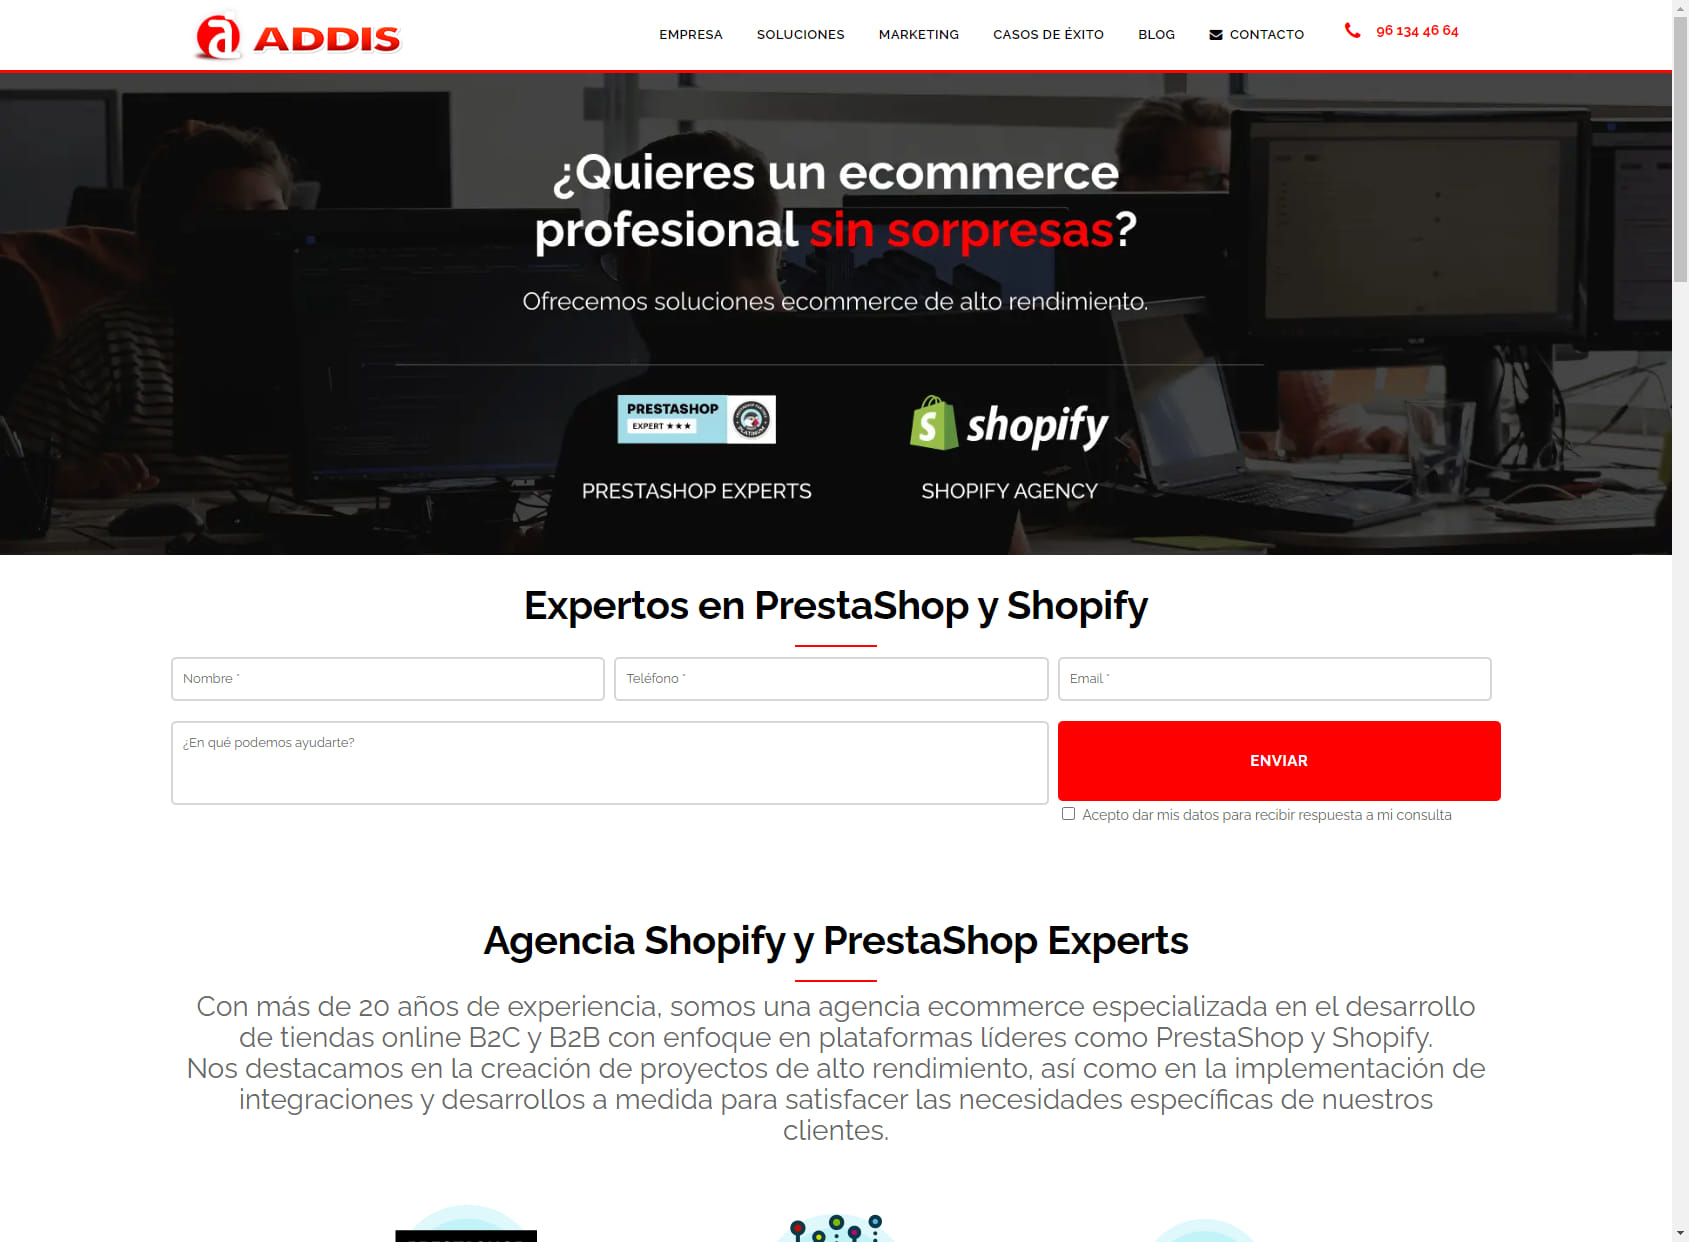 ADDIS NETWORK S.L. Agencia ecommerce Prestashop Expert y Shopify